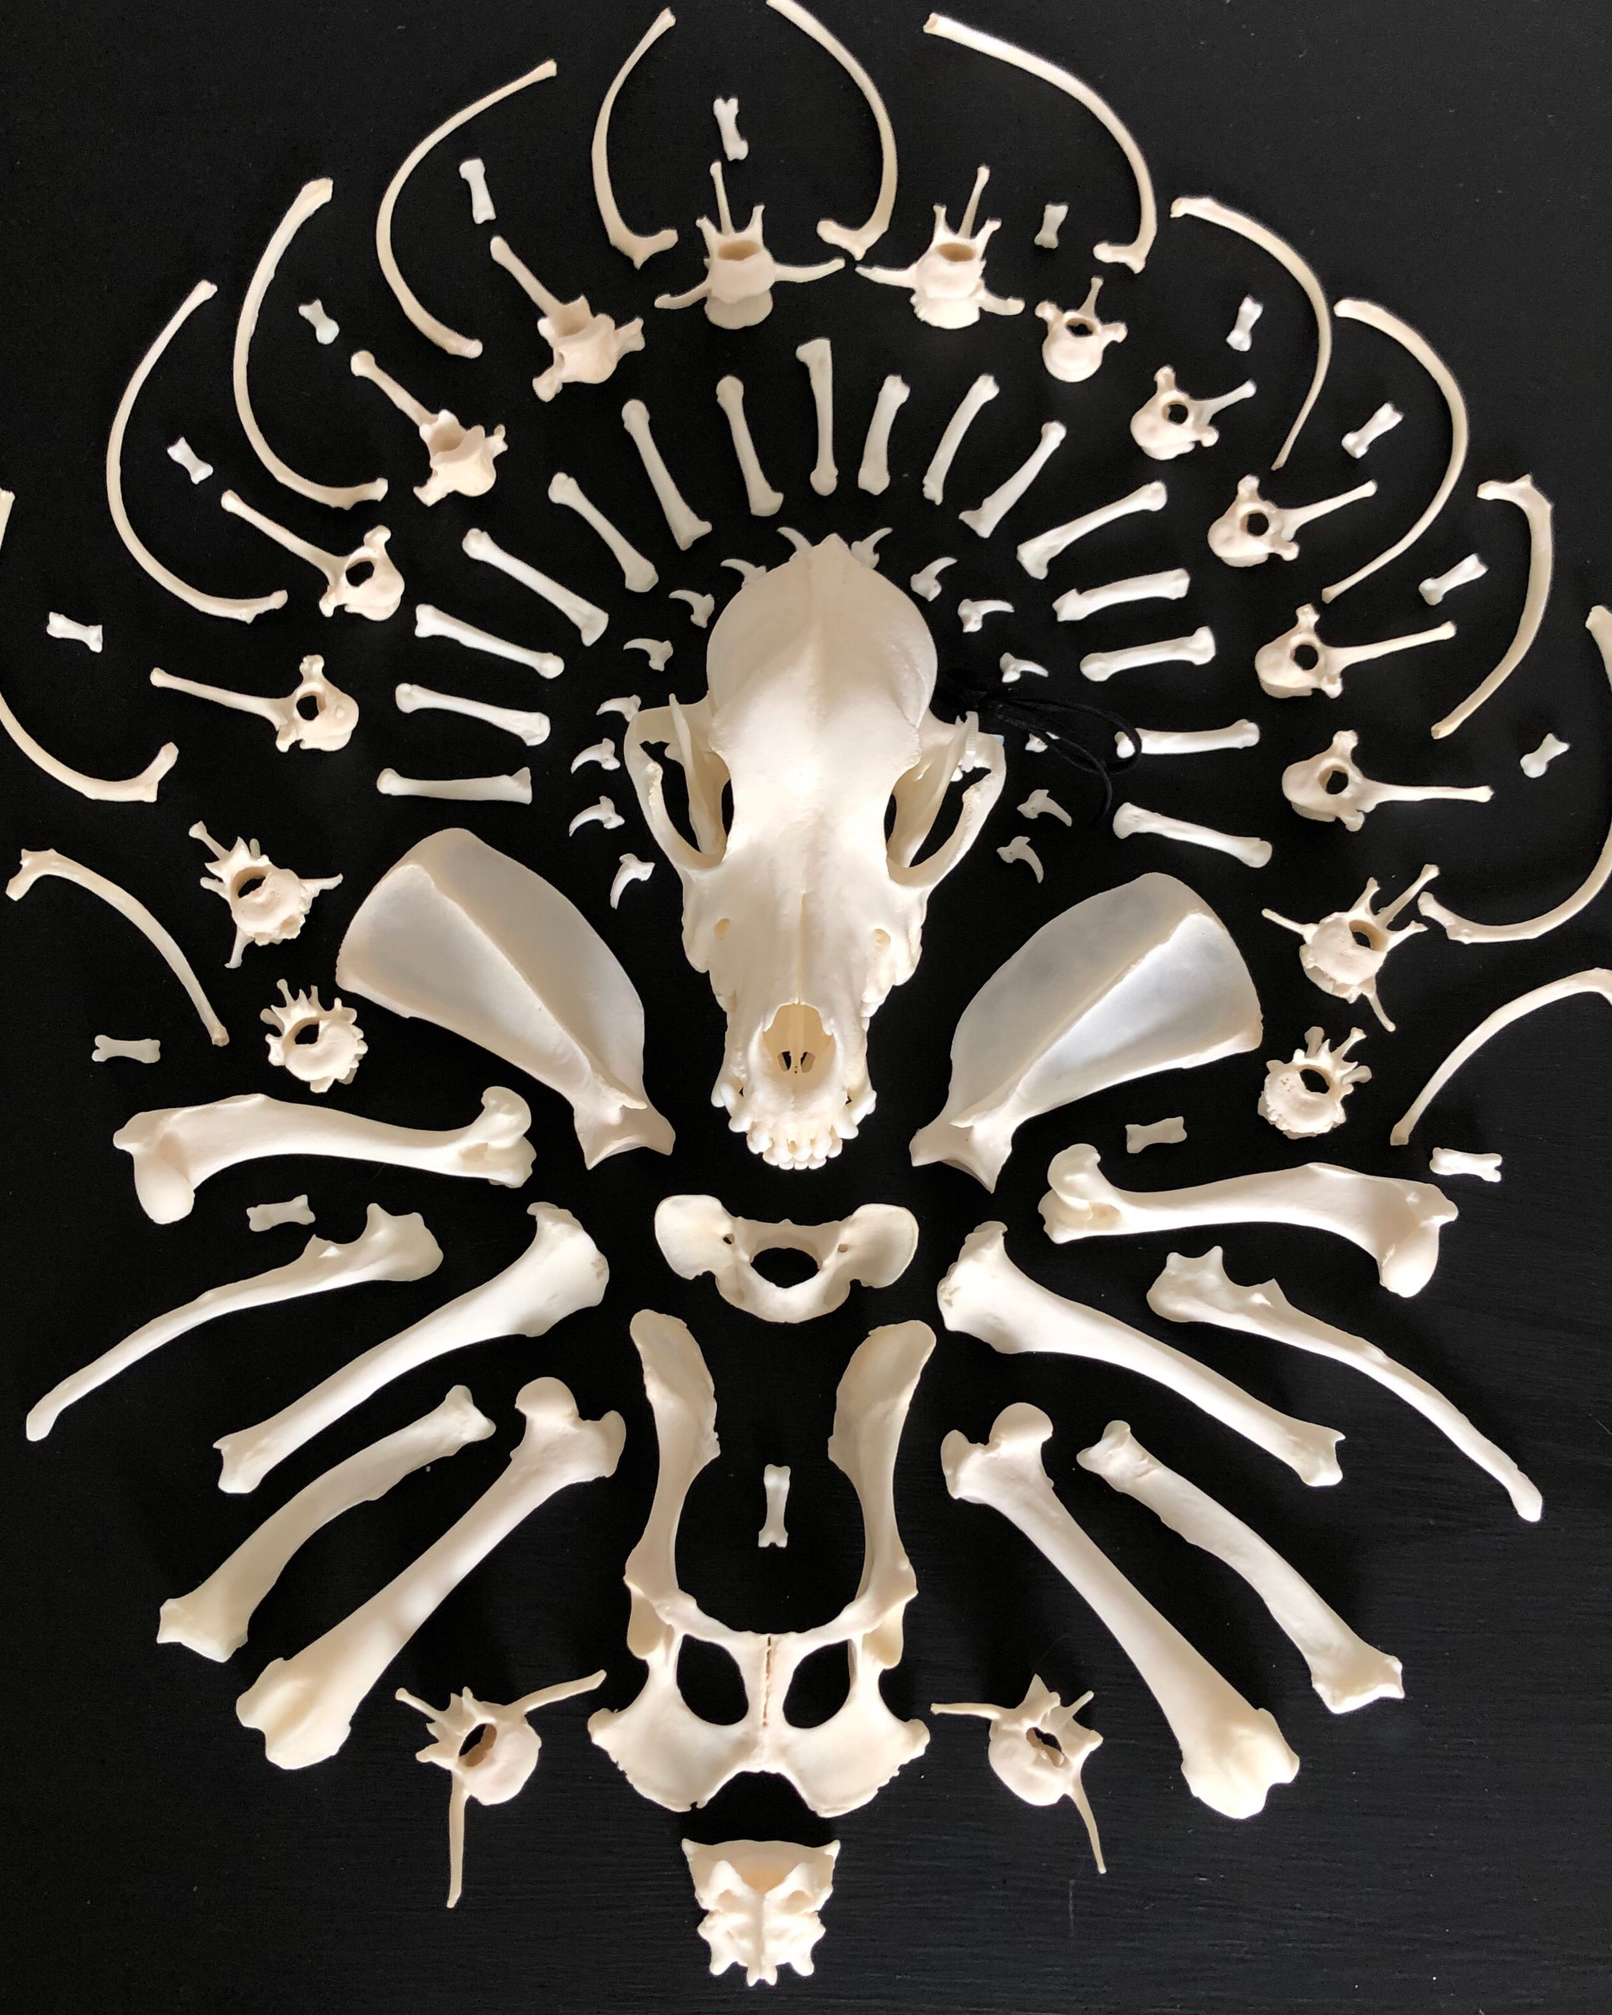 Mandala-like arrangement of bones surrounding an animal skull